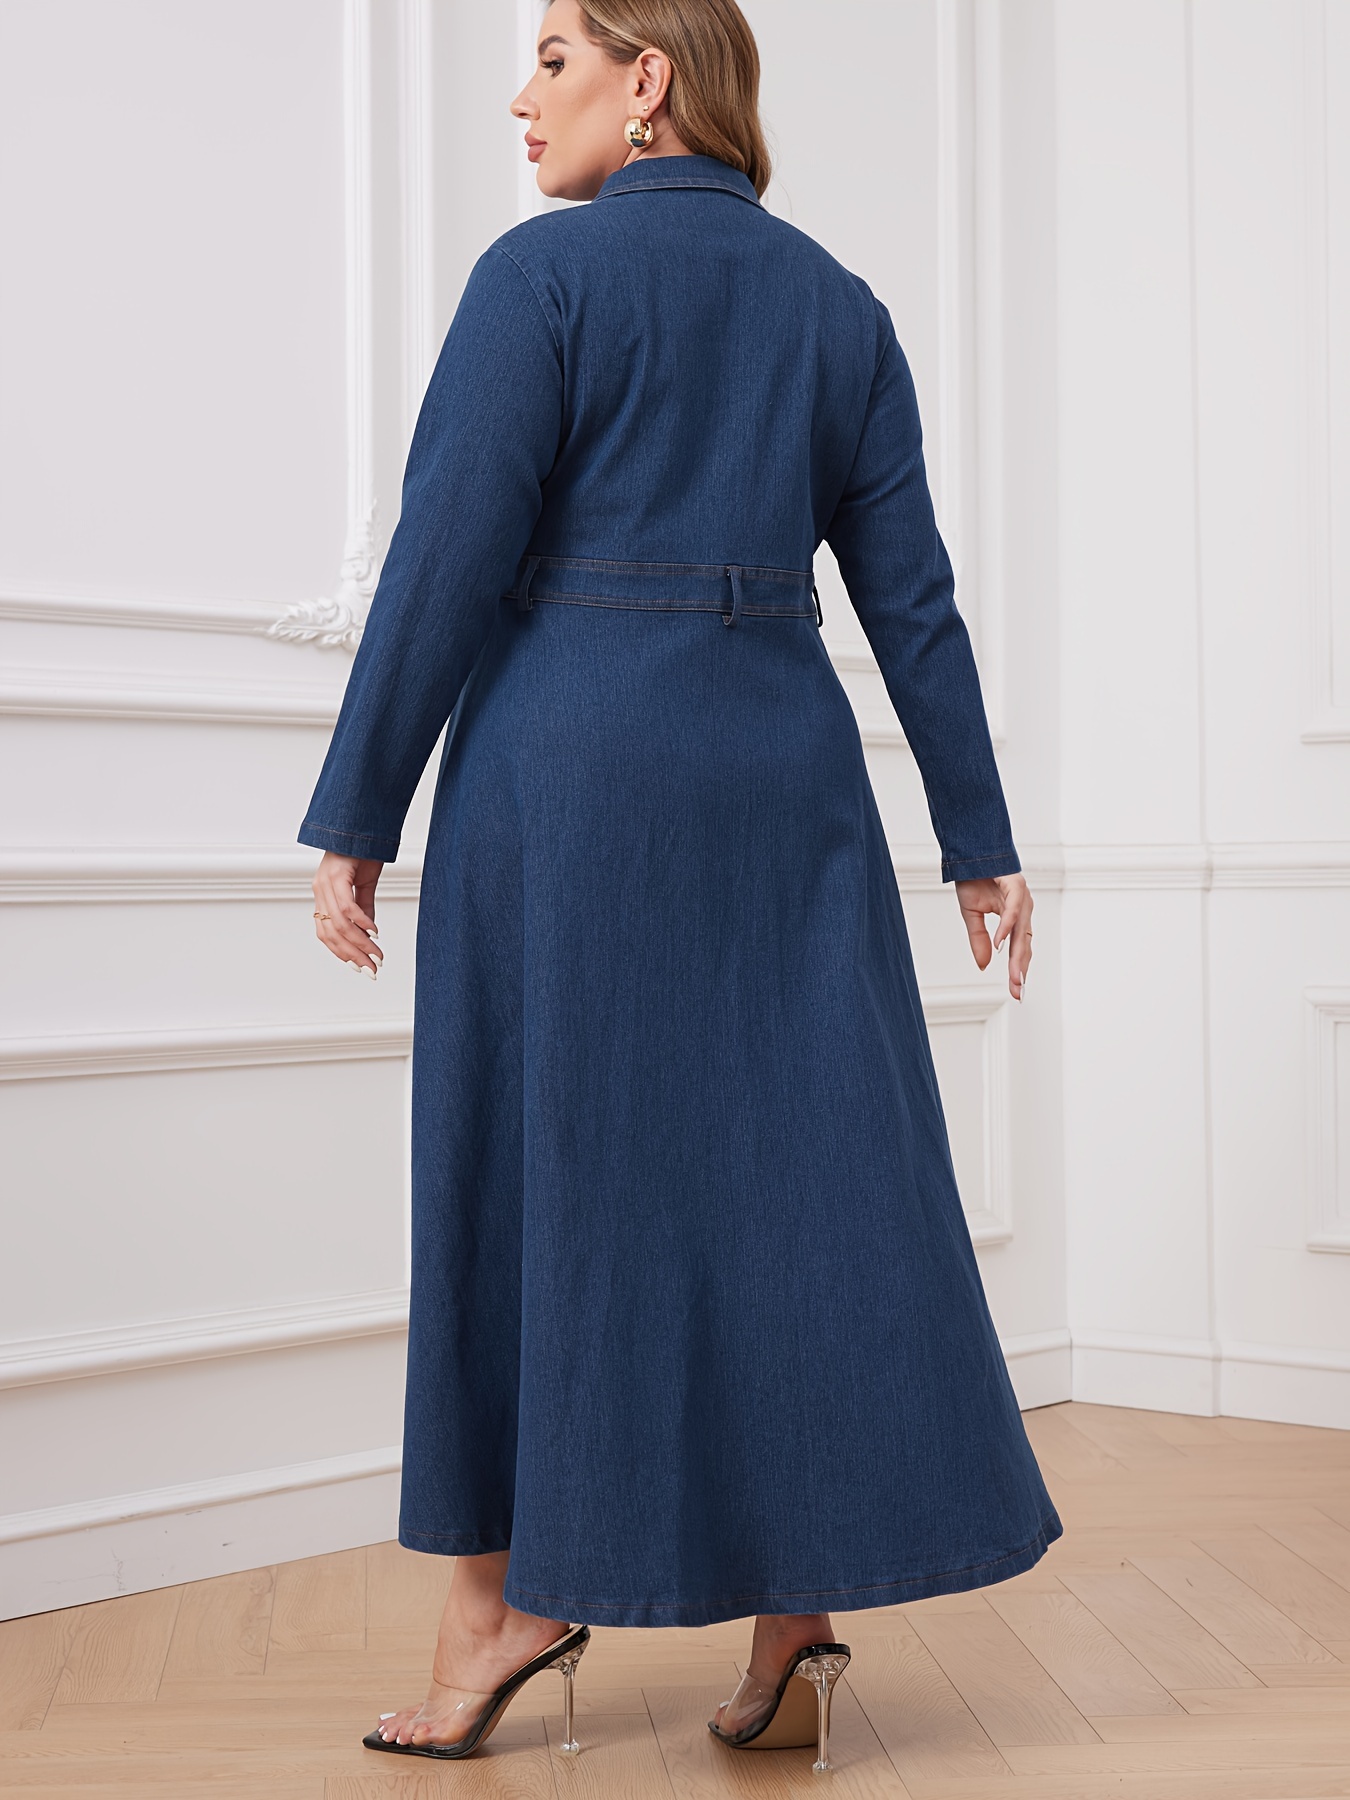 Plus Size Casual Denim Dress, Women's Plus Solid Long Sleeve Button Up  Lapel Collar Maxi Denim Dress With Pockets